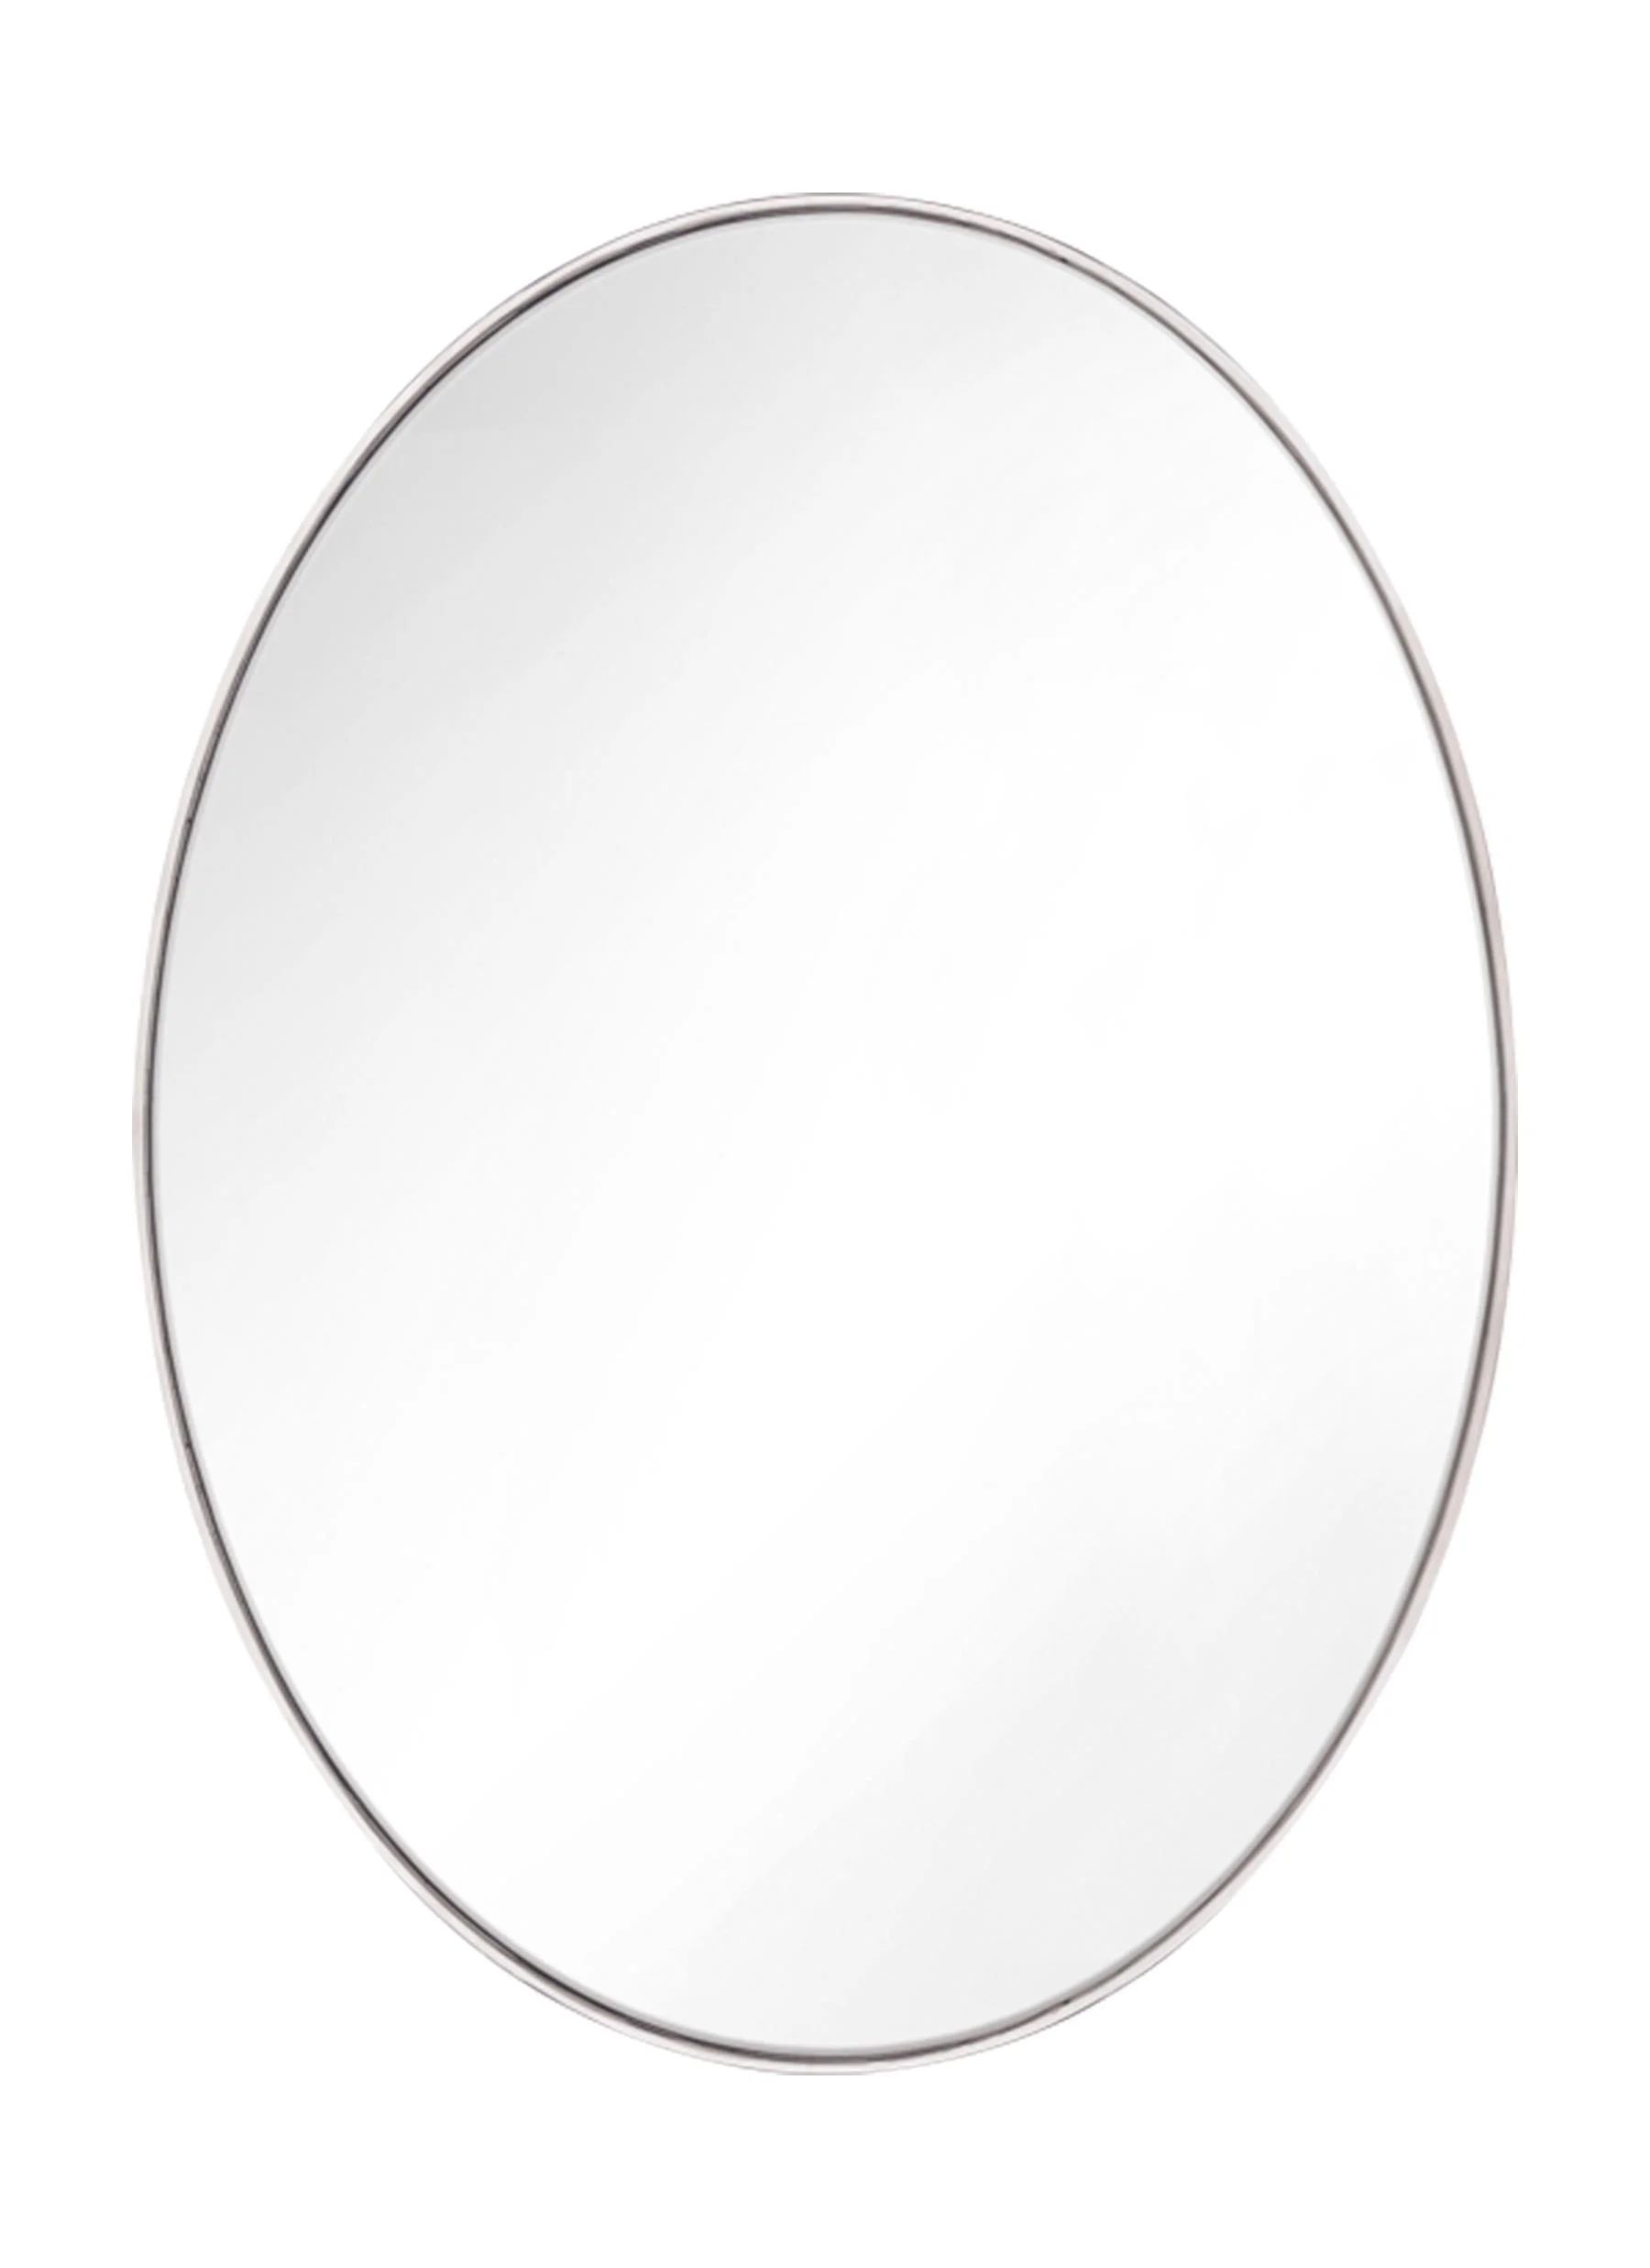 Kadin Modern Vanity Mirror | Wayfair North America